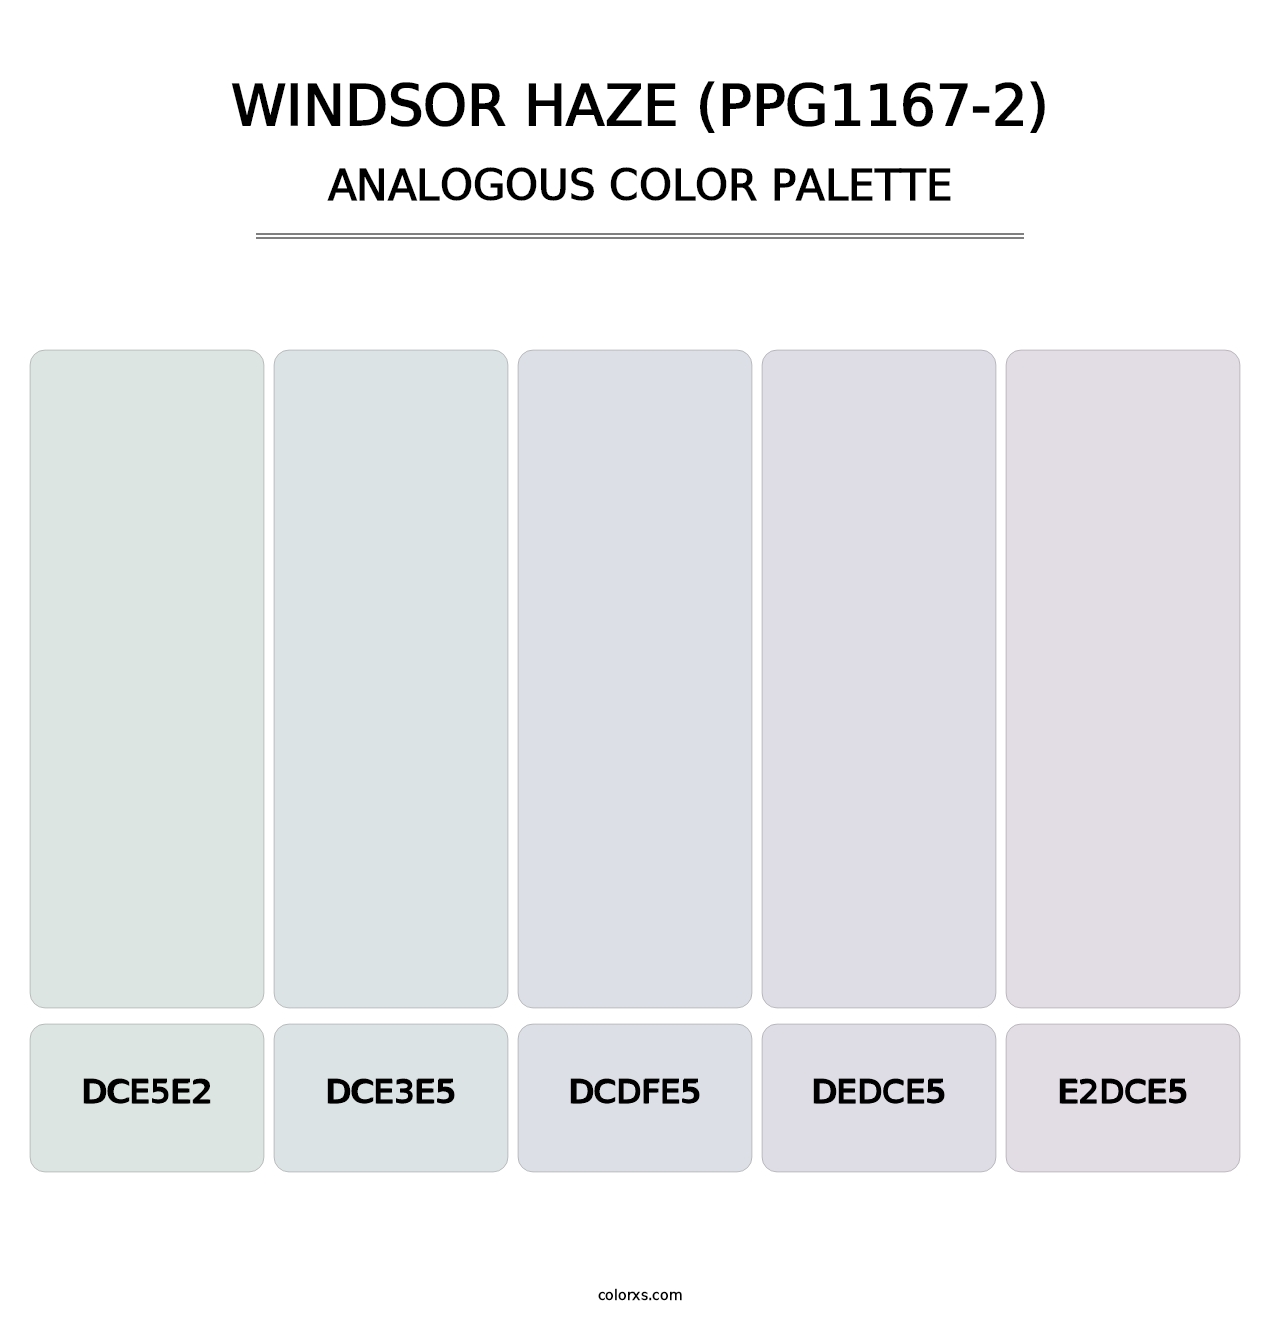 Windsor Haze (PPG1167-2) - Analogous Color Palette